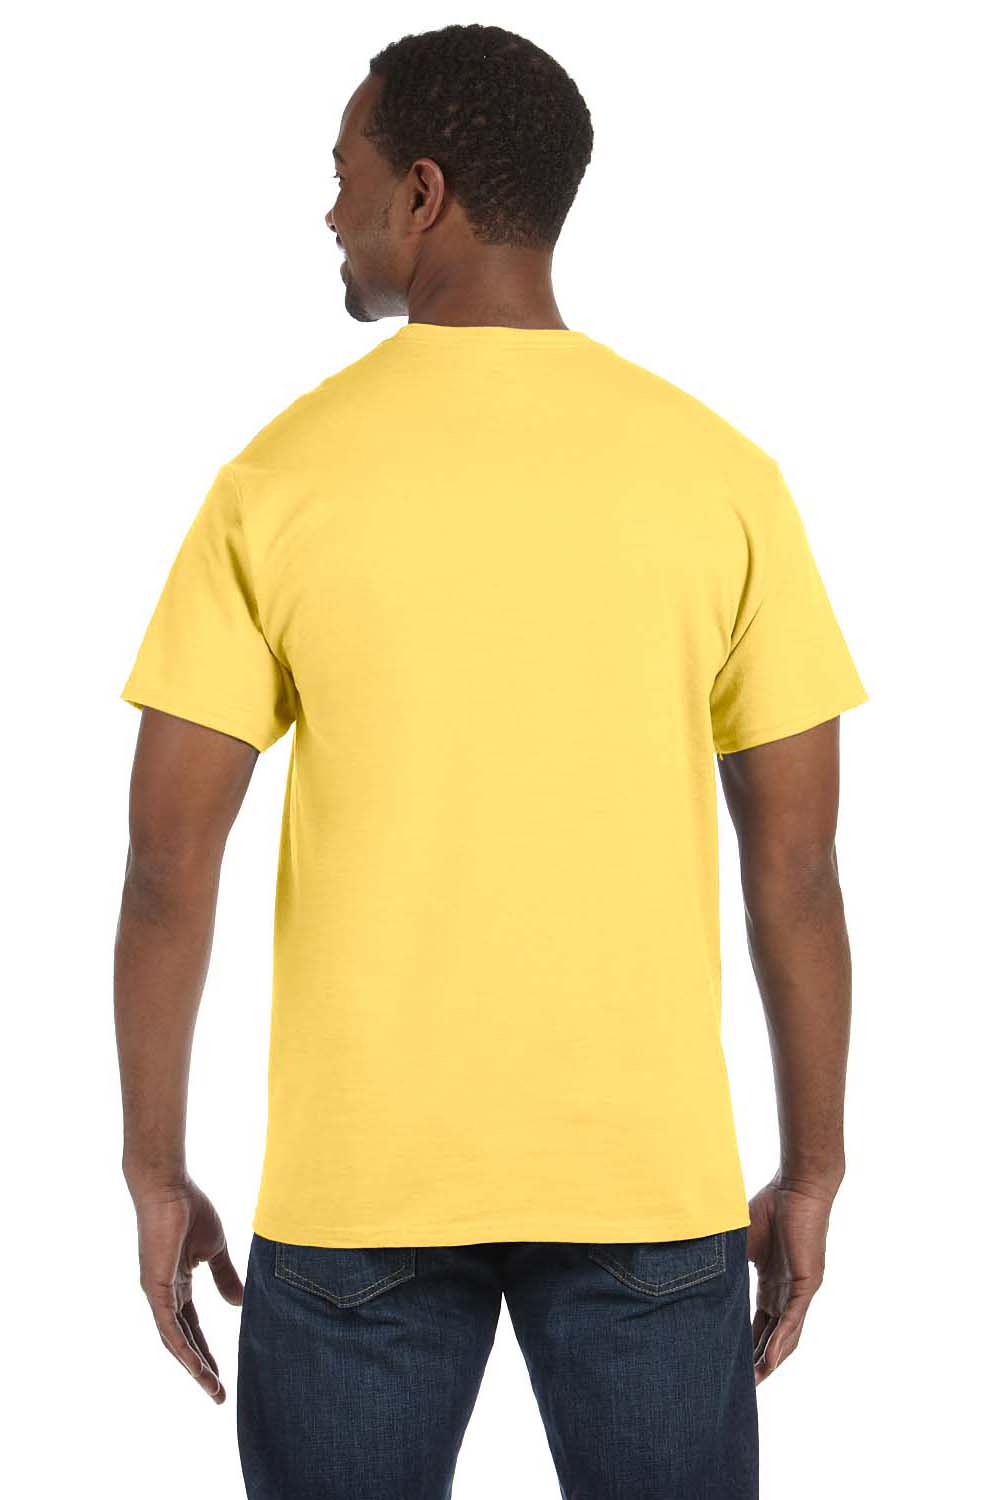 Hanes 5250T Mens ComfortSoft Short Sleeve Crewneck T-Shirt Daffodil Yellow Back